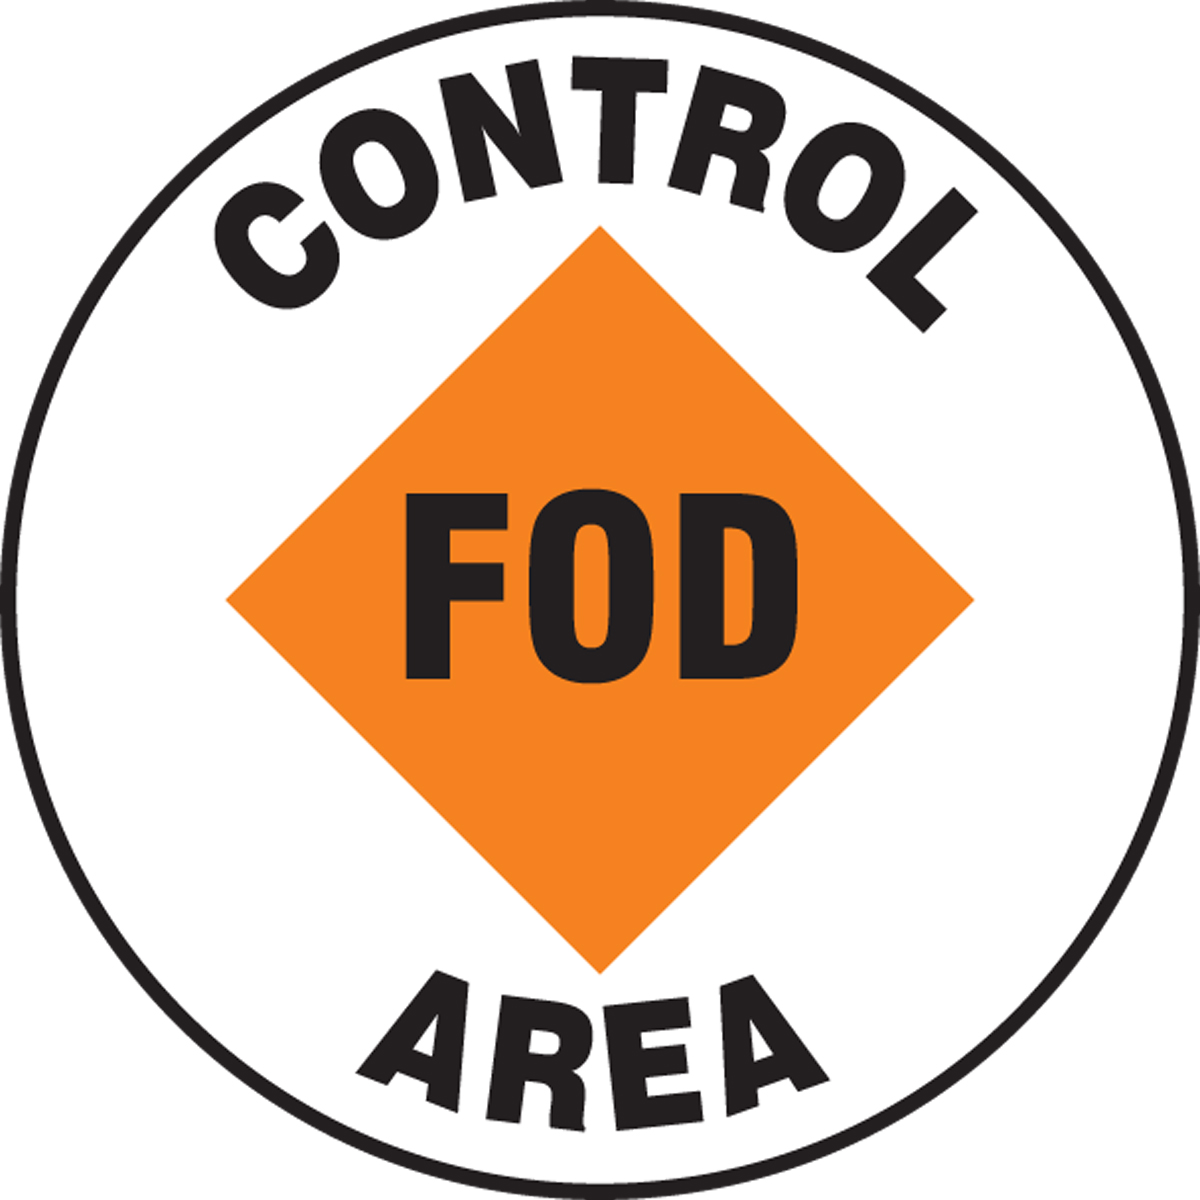 Plant & Facility, Legend: FOD CONTROL AREA